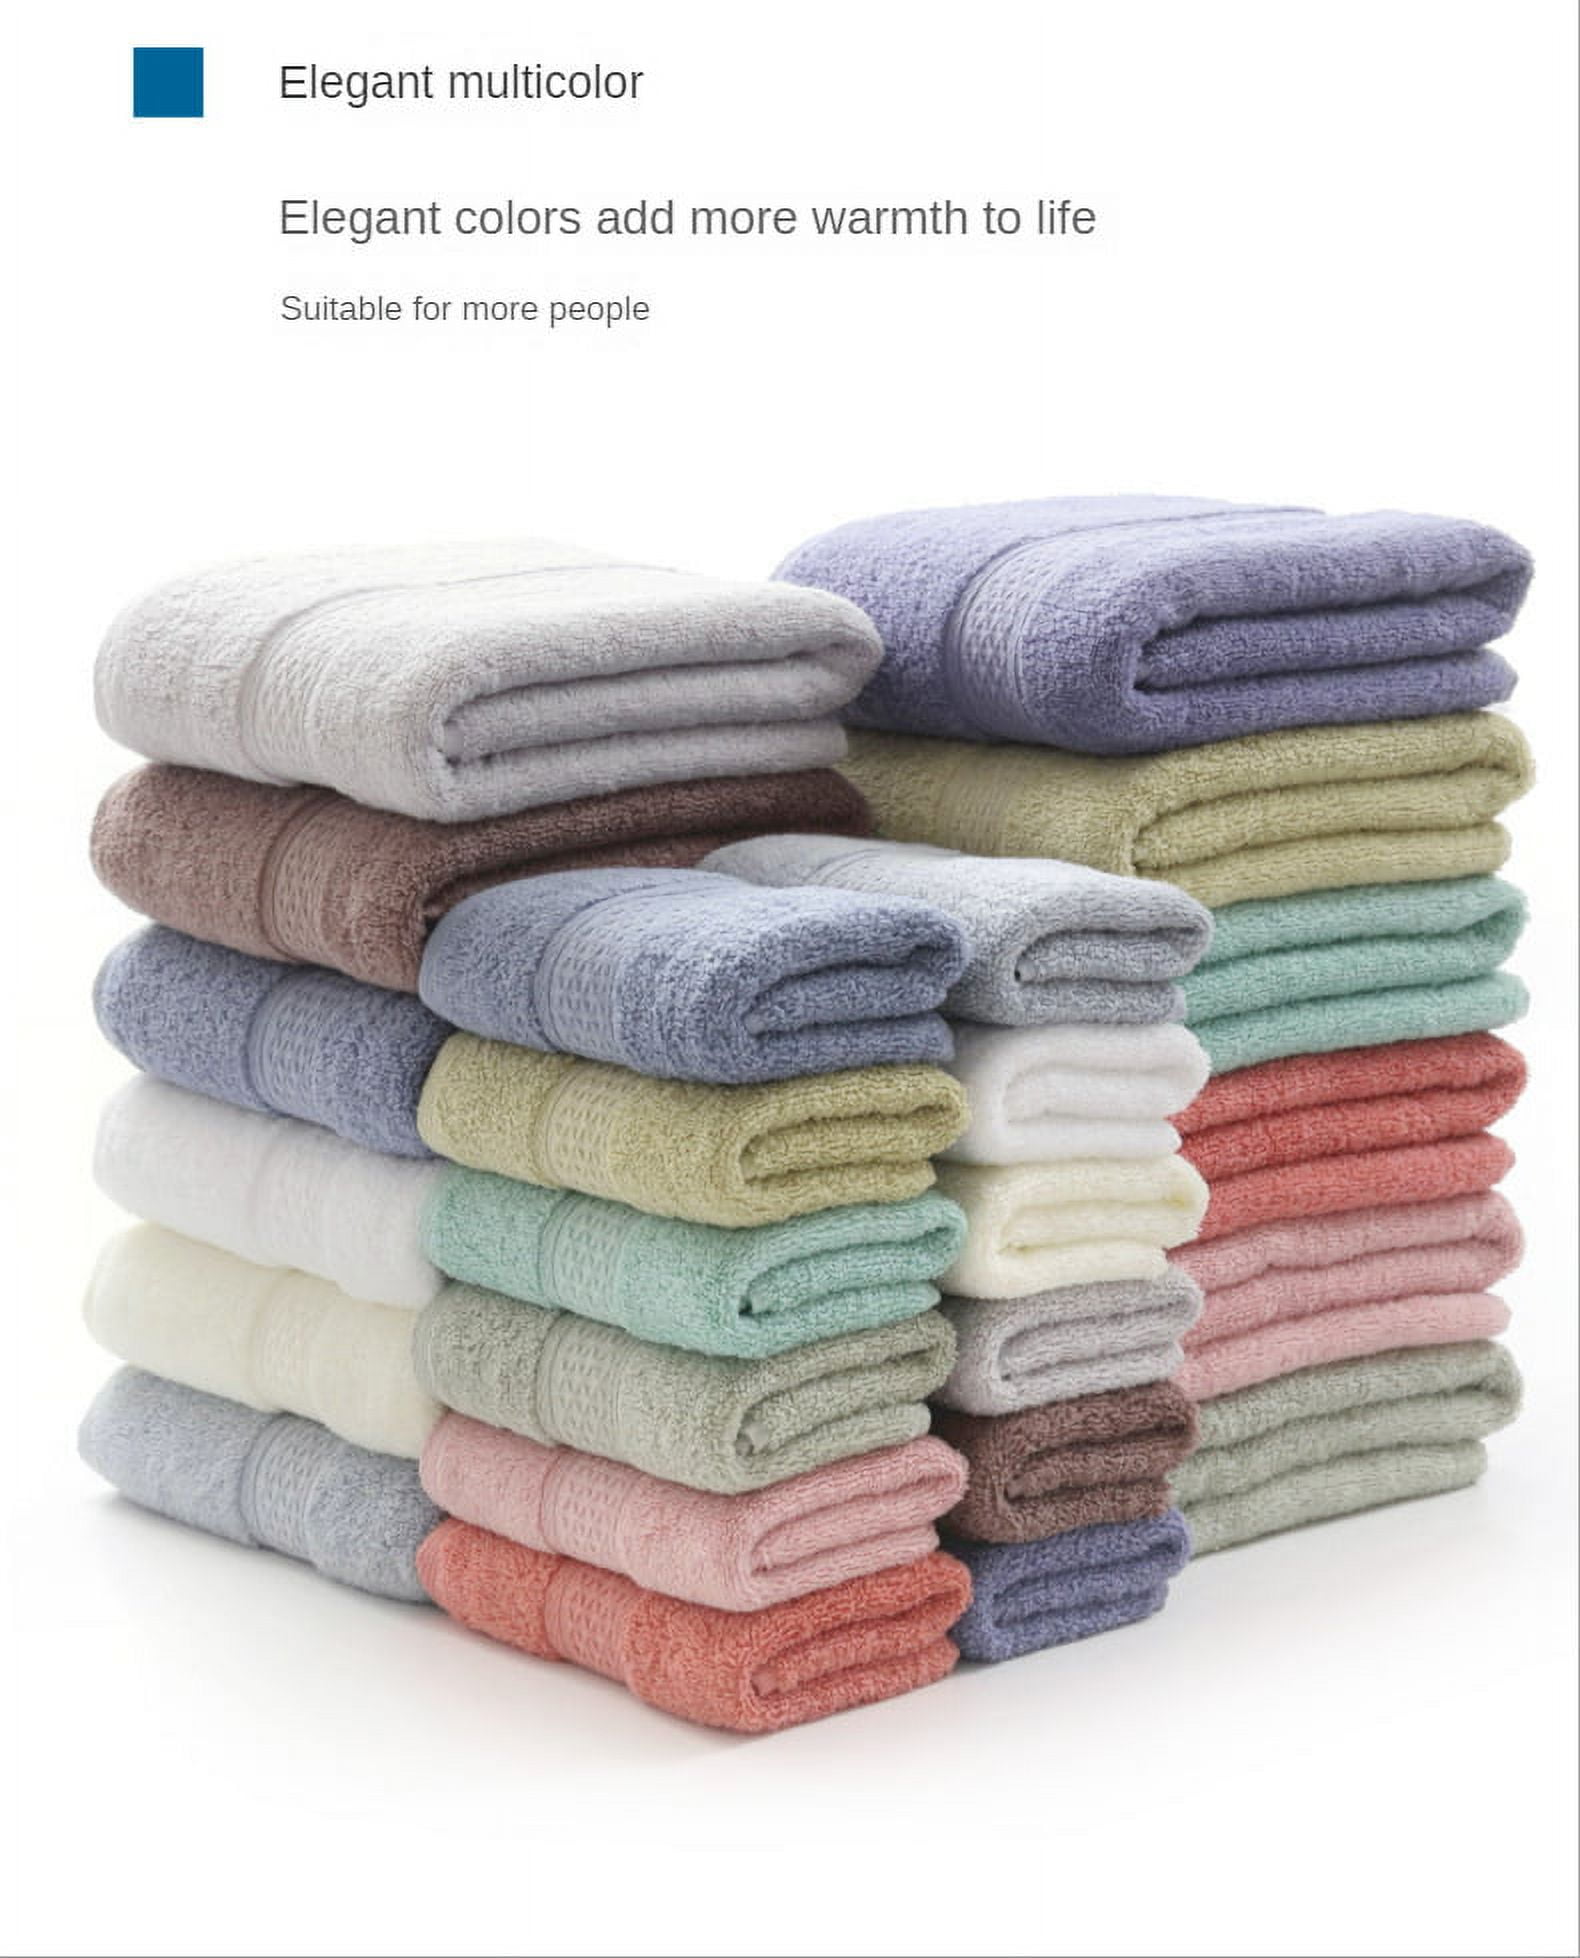 Chakir Turkish Linens Turkish Cotton Luxury Hotel & Spa Bath Towel, Bath  Towel - Set of 4, Gray